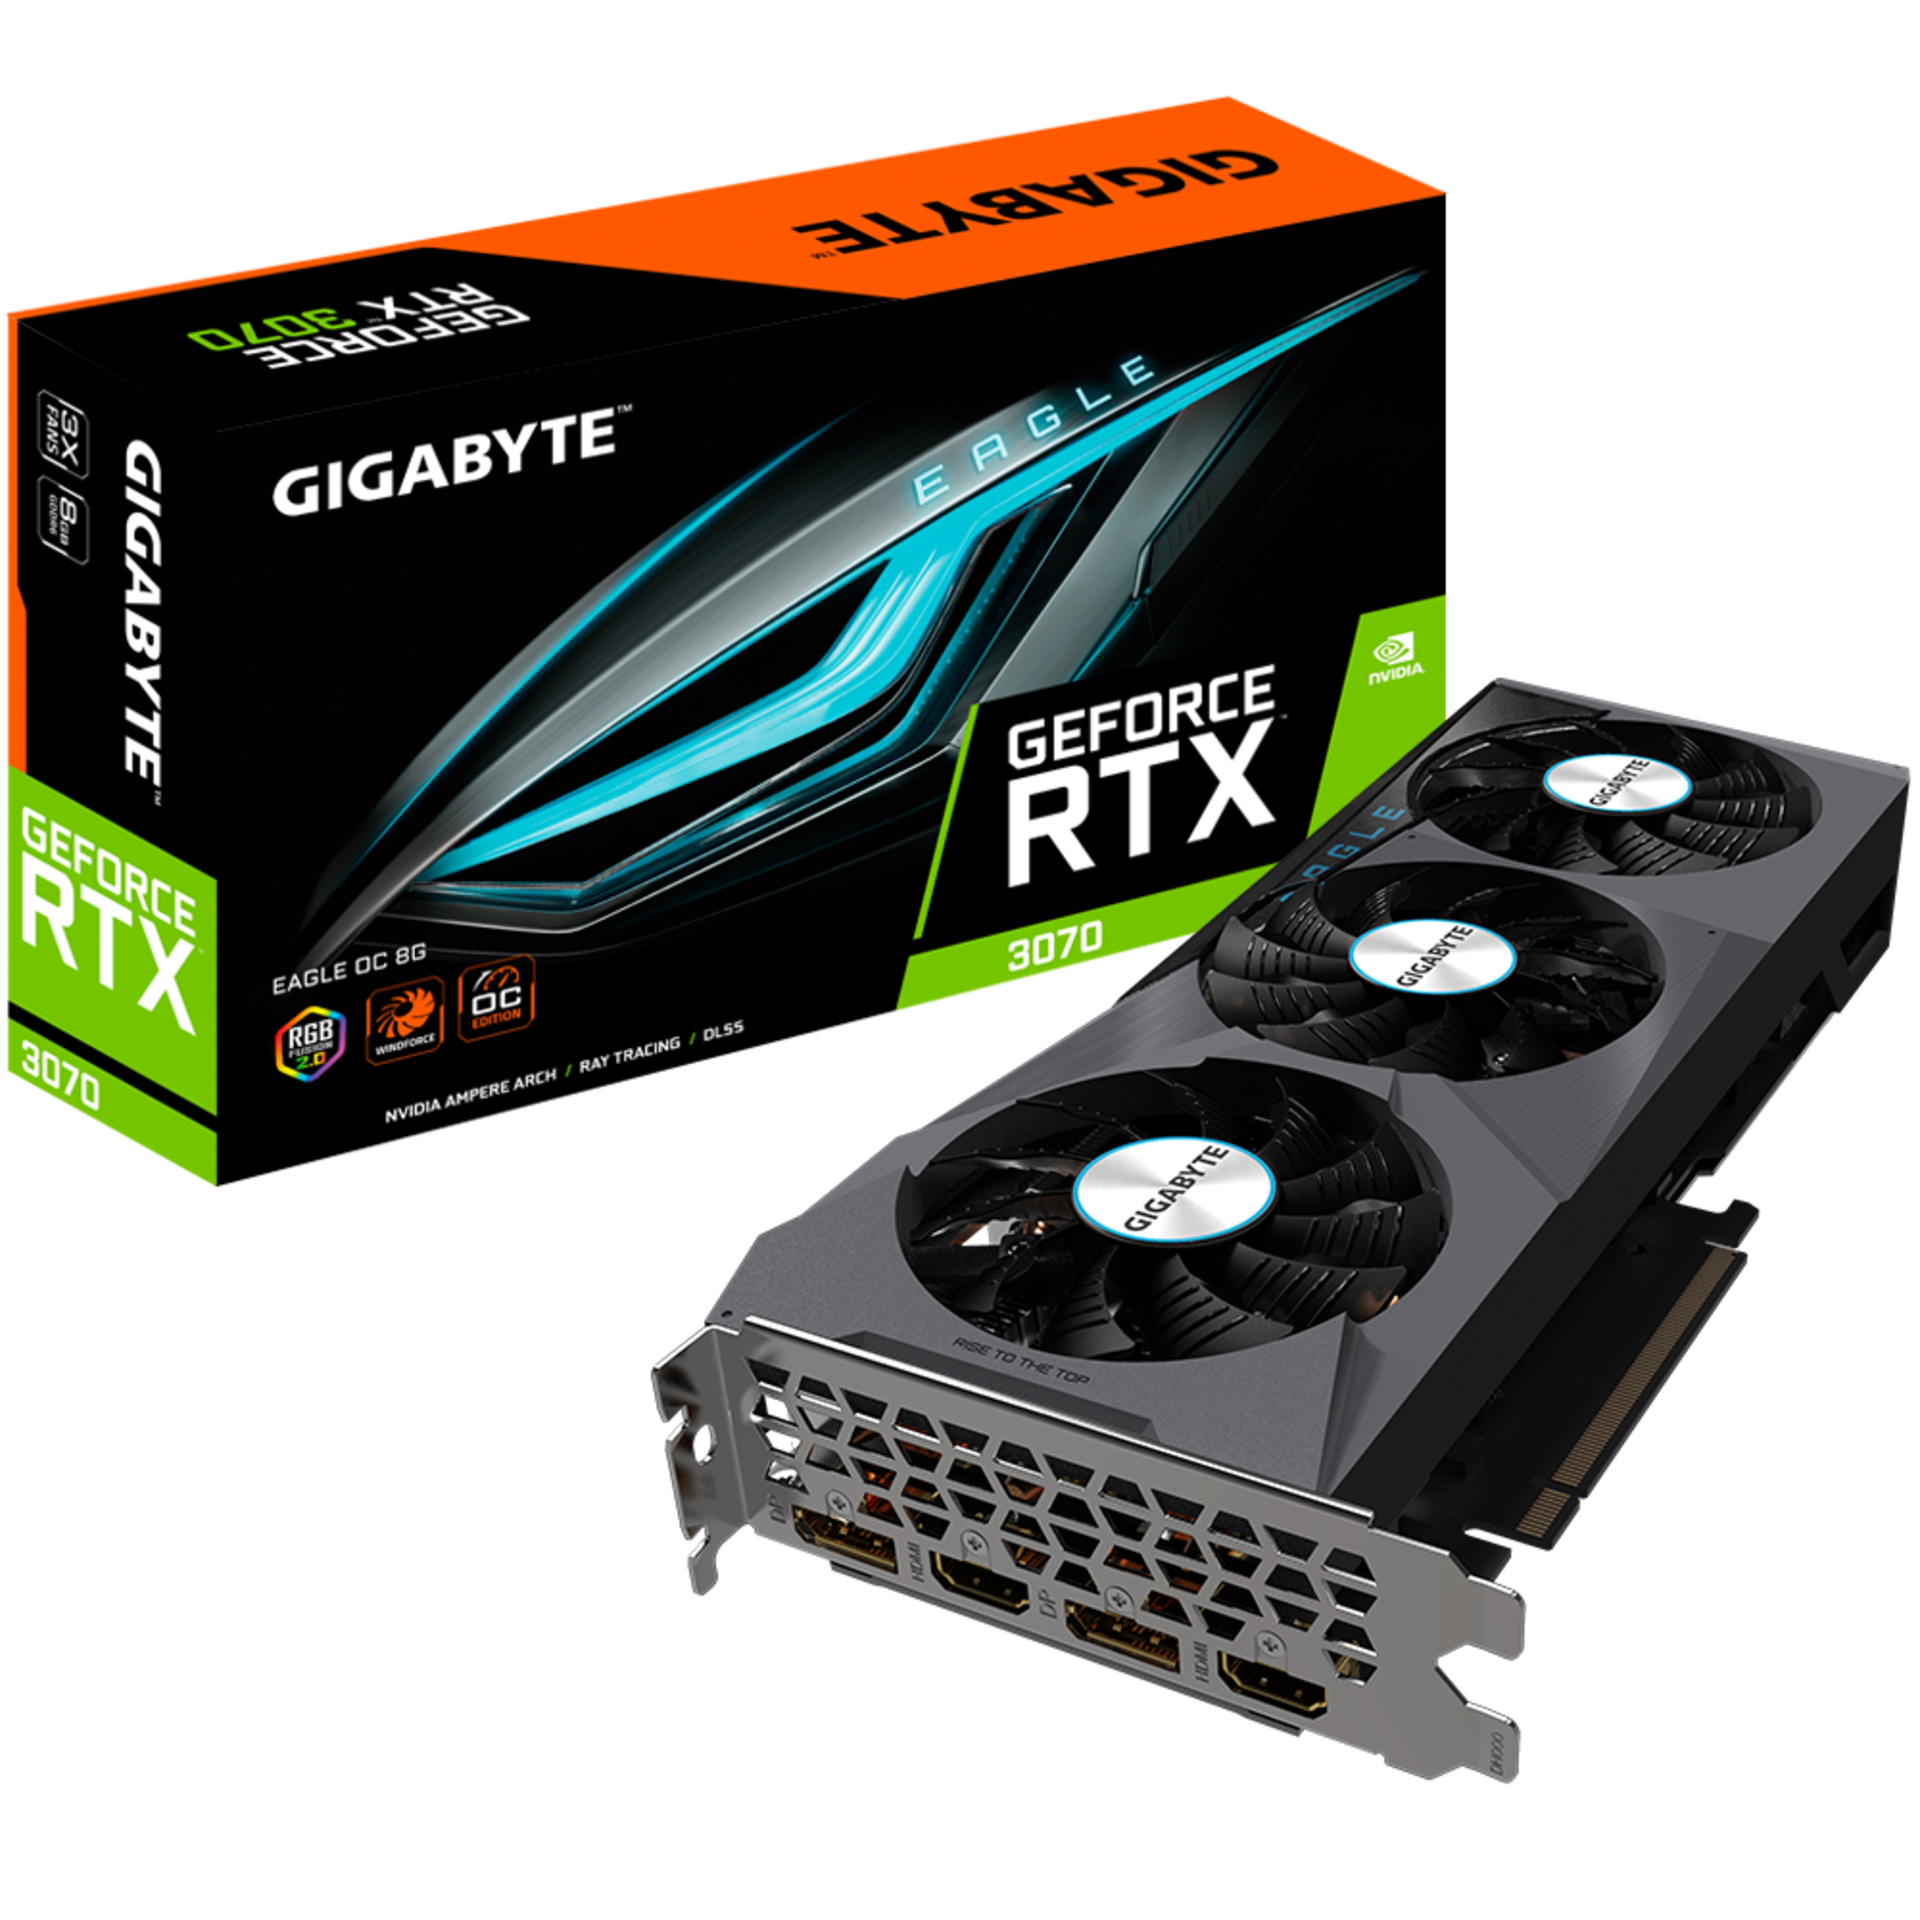 GeForce RTX™ 3070 EAGLE OC 8G (rev. 1.0) Graphics Card. - P6. RRP £750.00. The WINDFORCE 3X